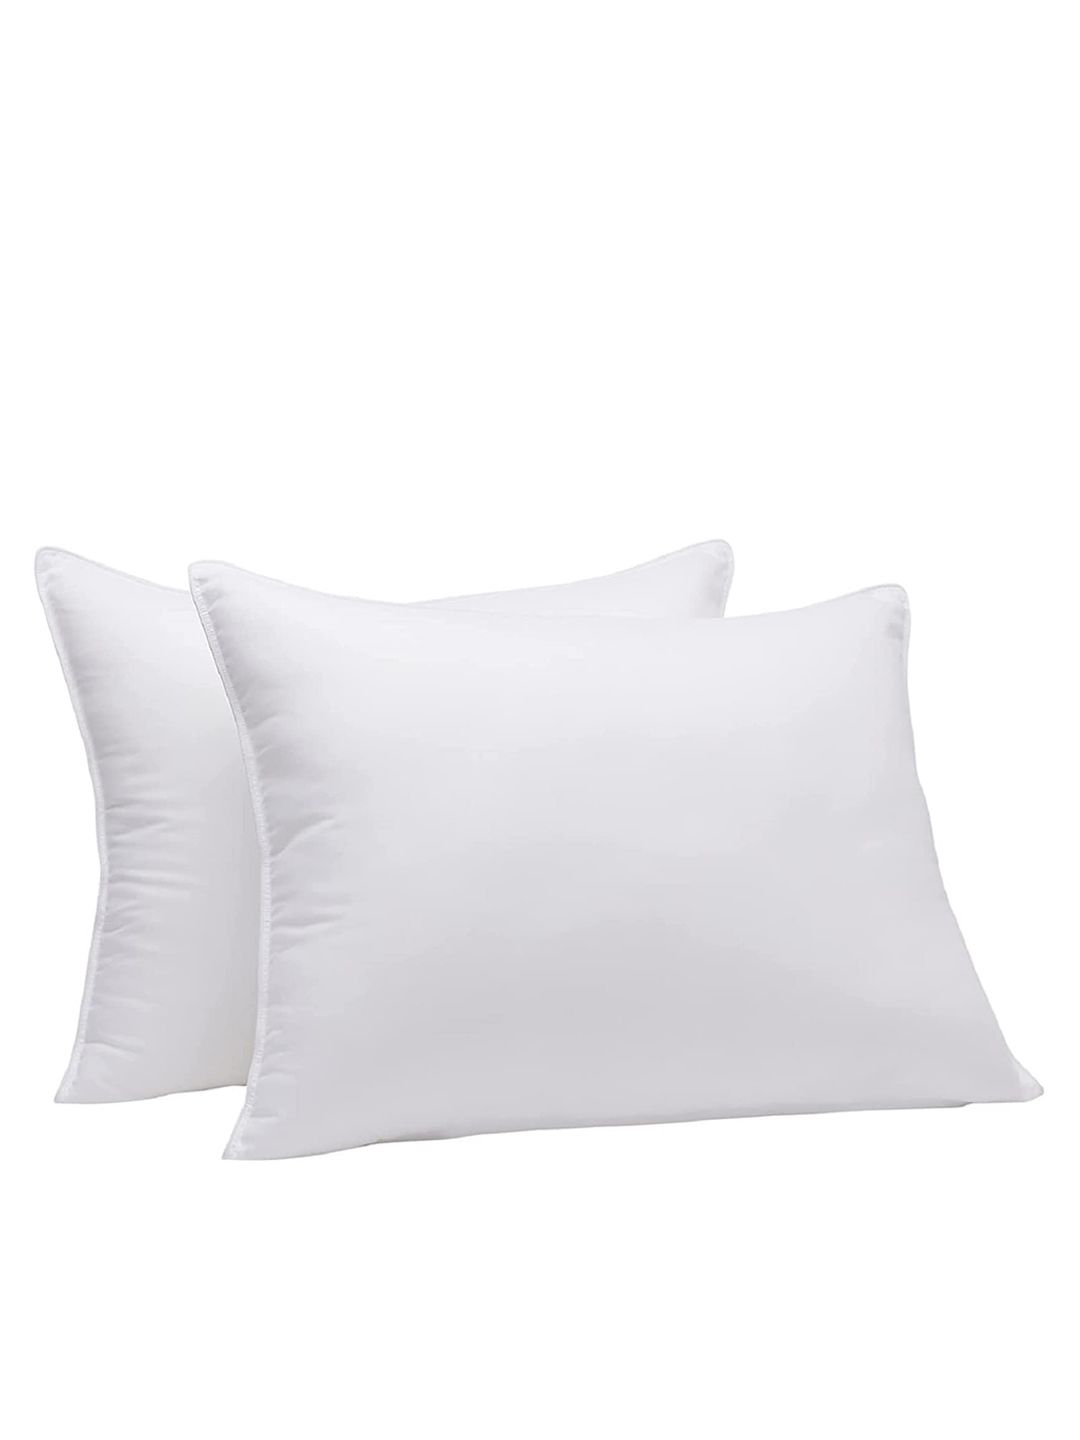 Pum Pum Set Of 2 White Solid Sleep Pillows Price in India